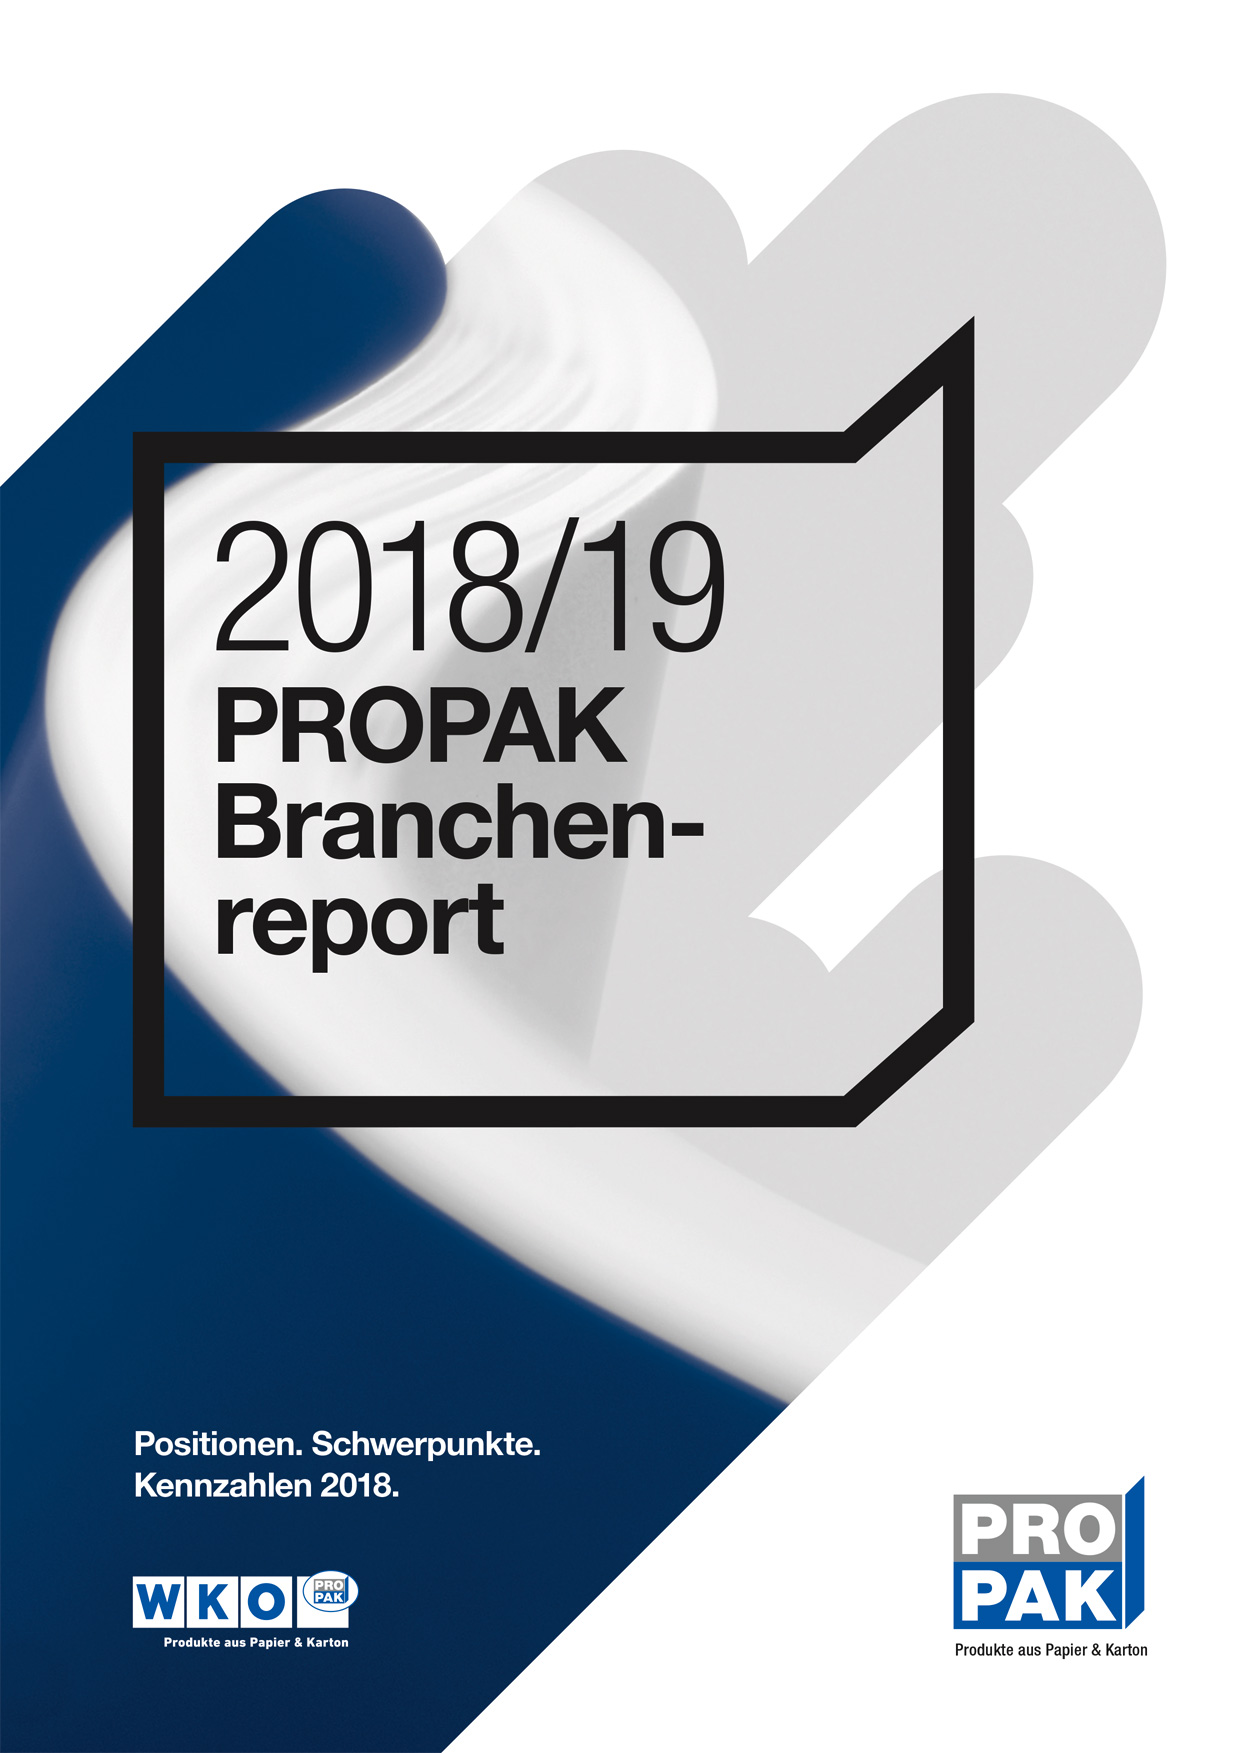 Propak Branchenreport 2018/19